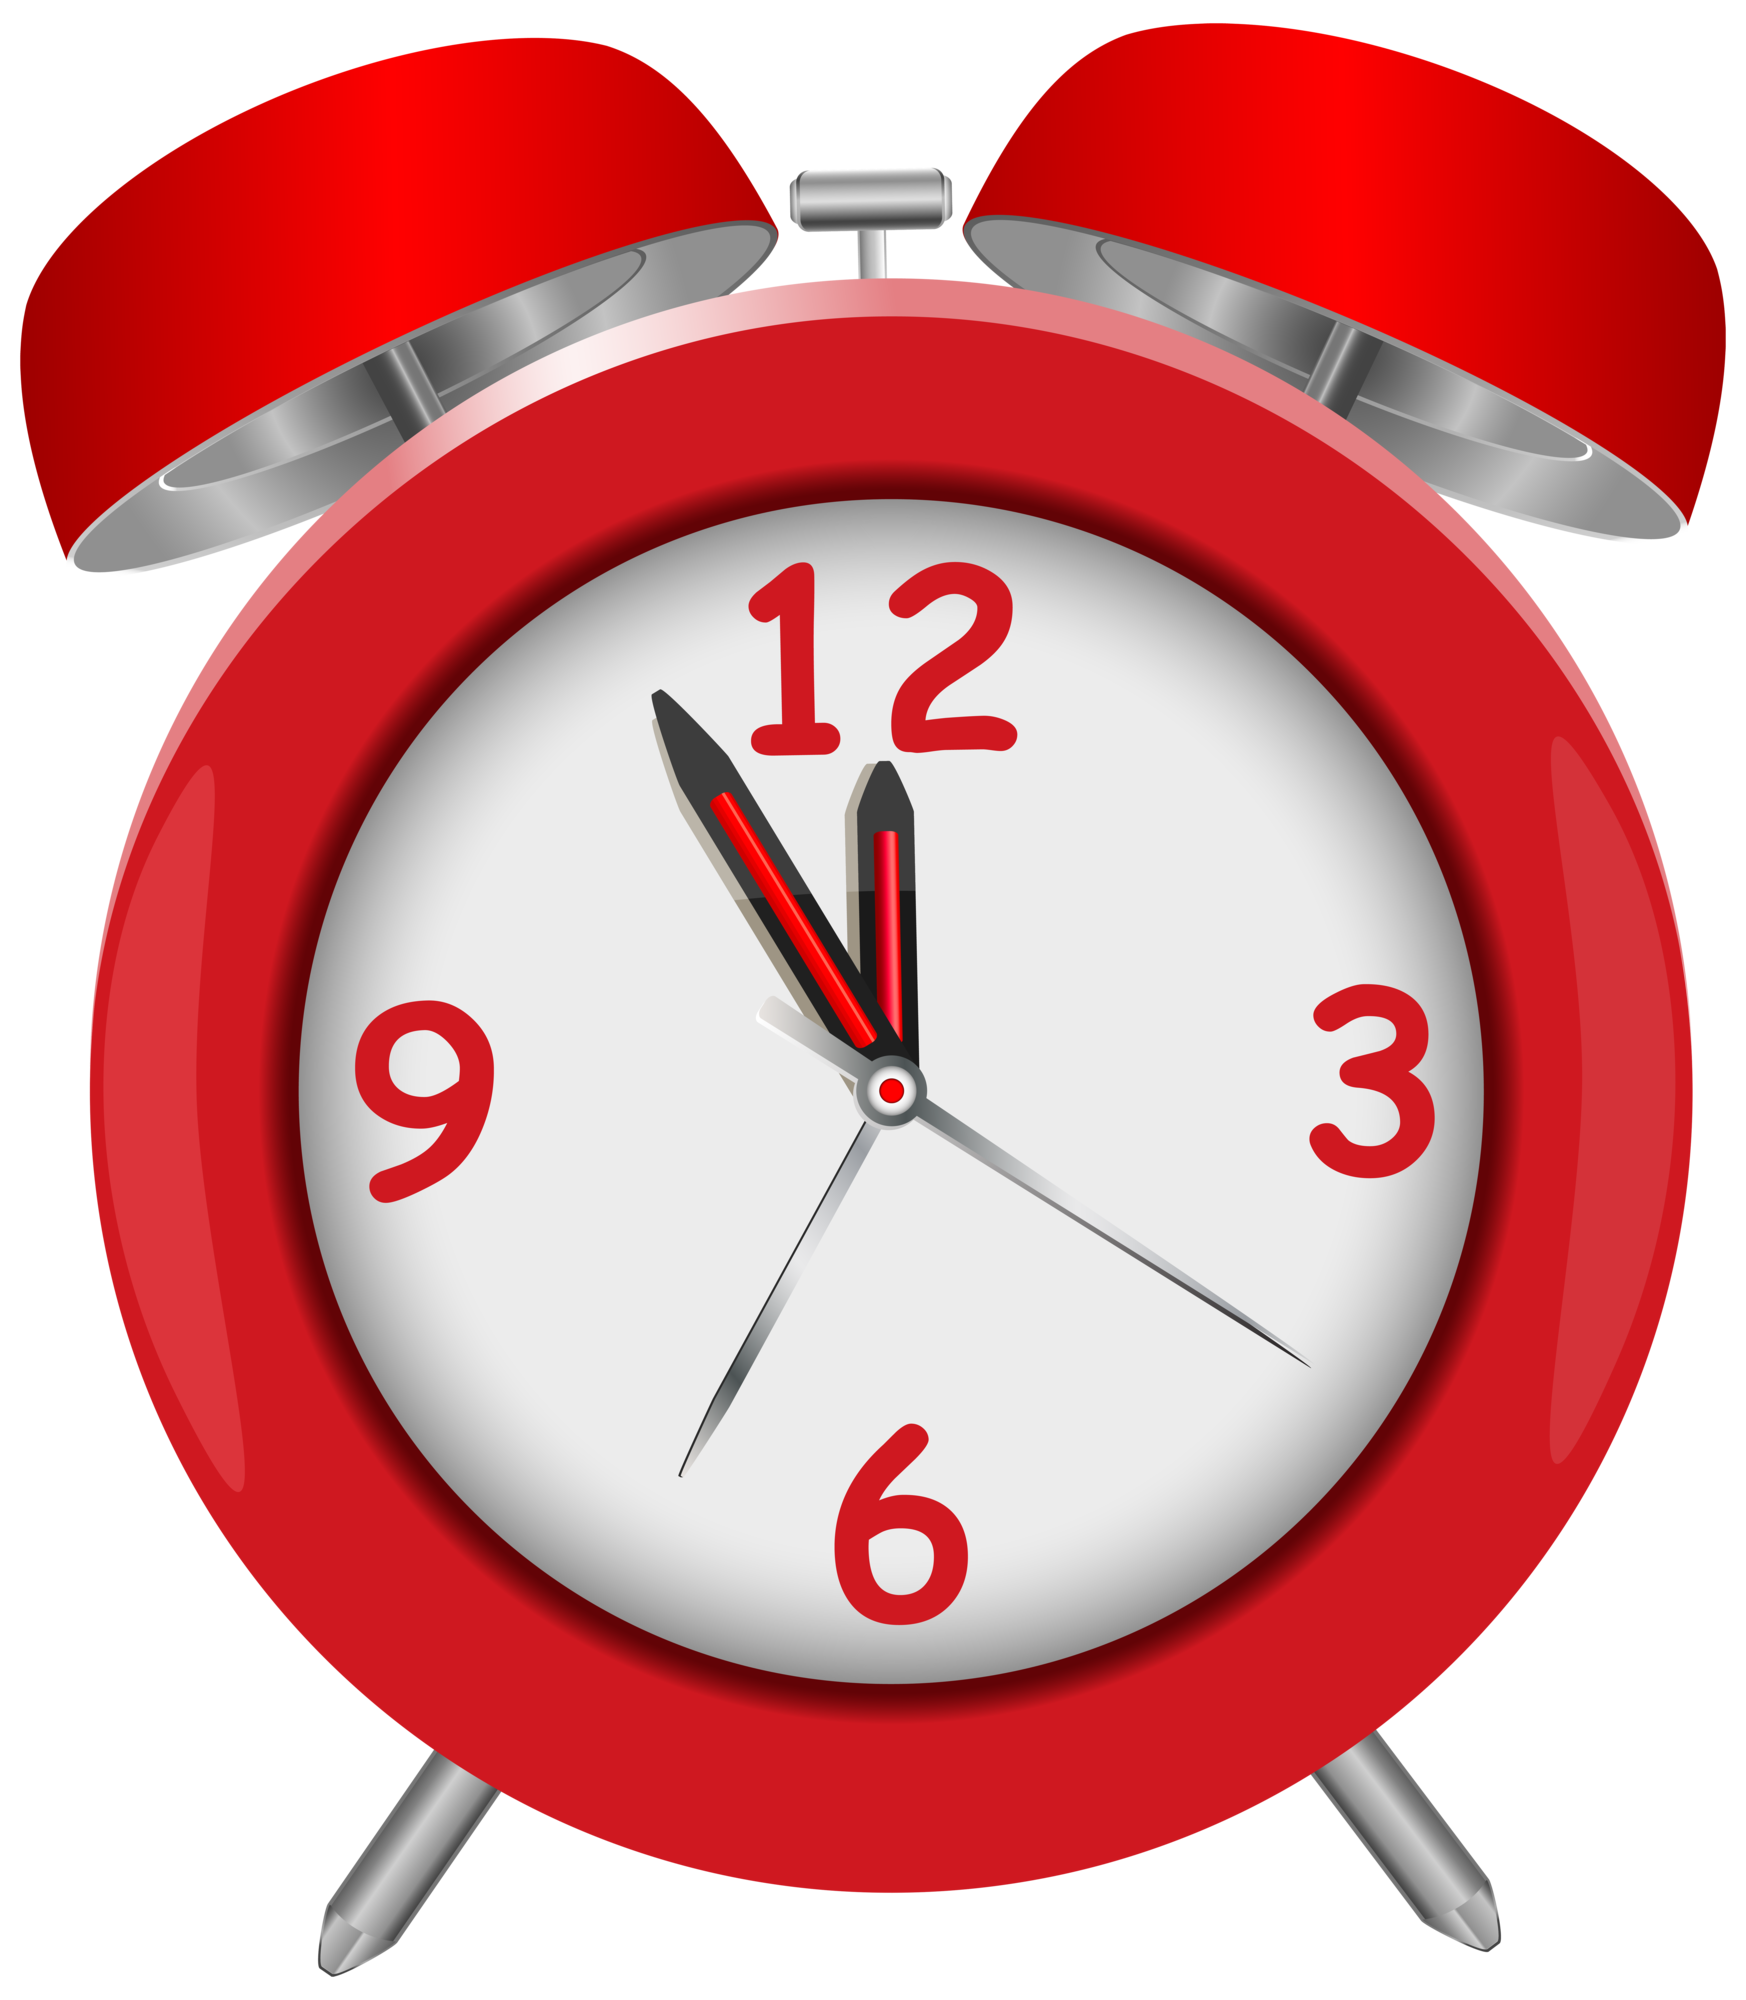 Alarm clock PNG images free download.